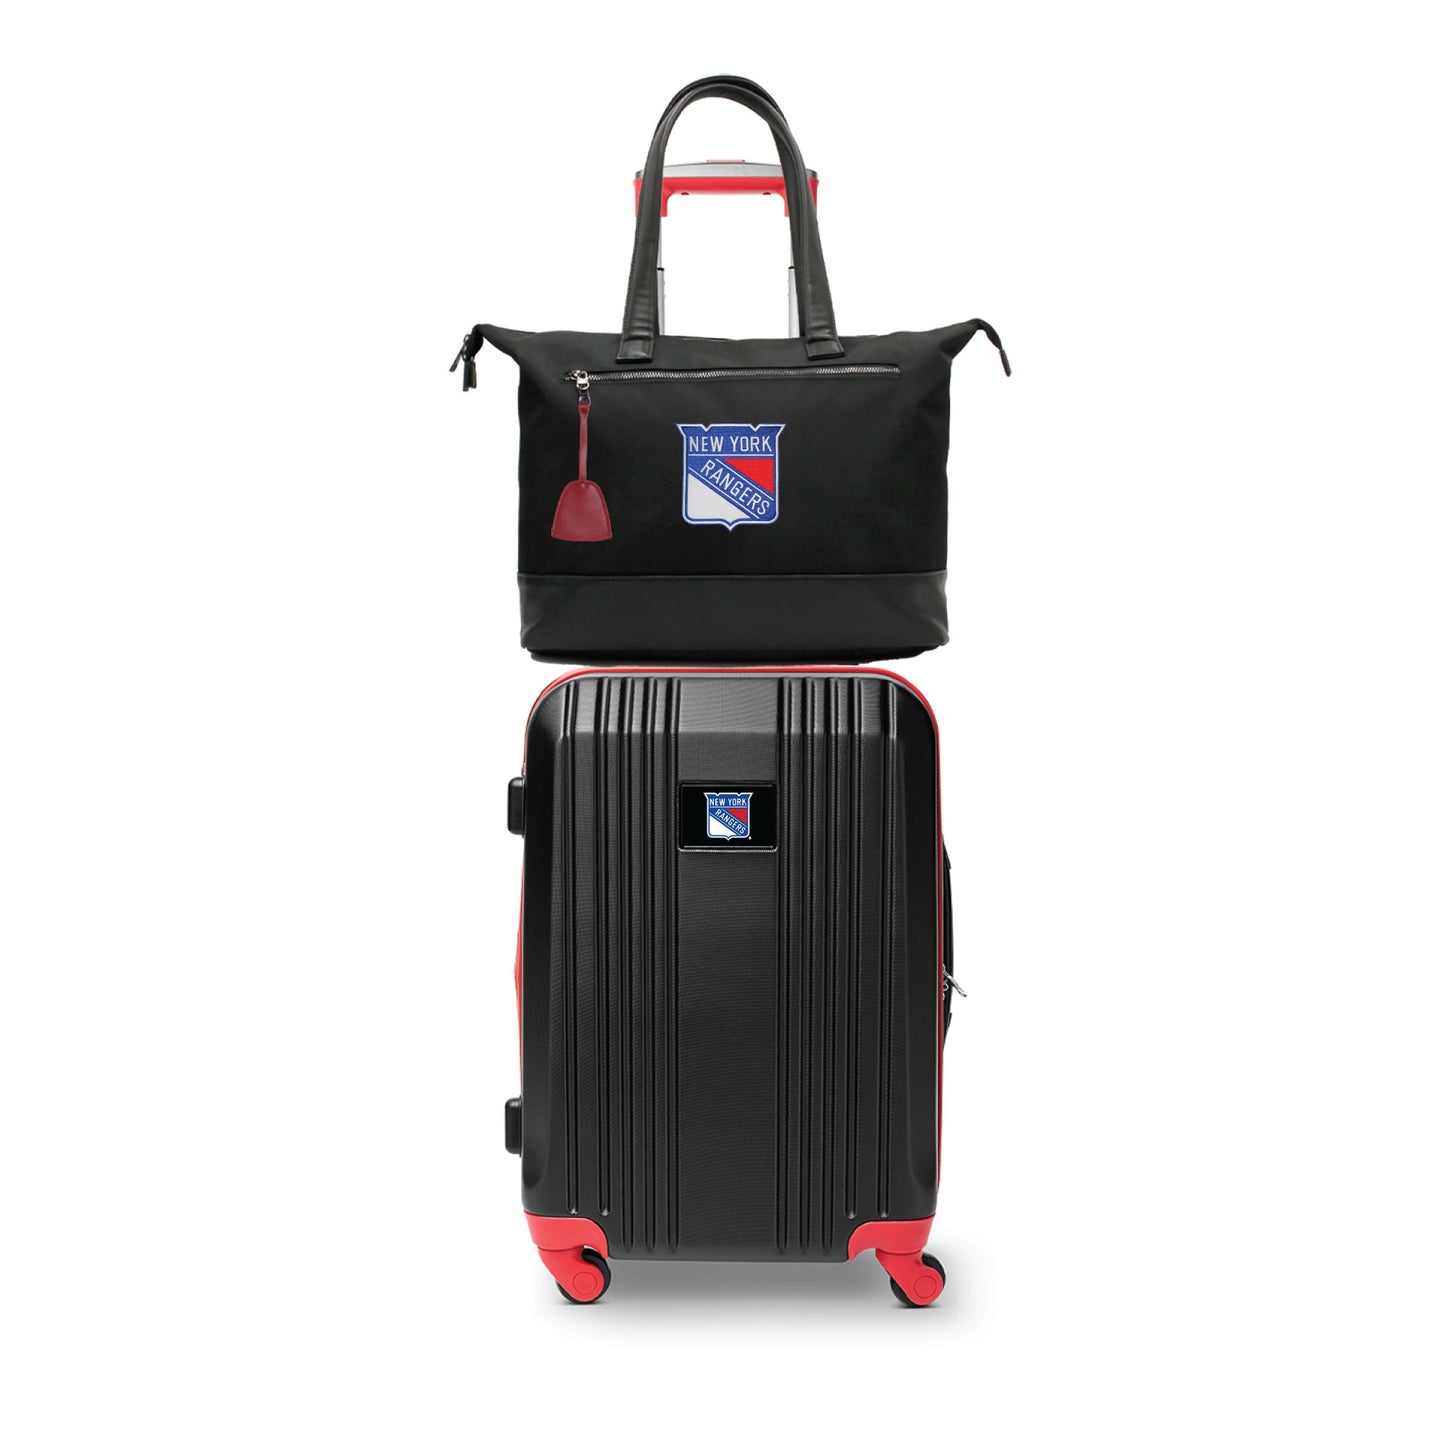 New York Rangers Premium Laptop Tote Bag and Luggage Set